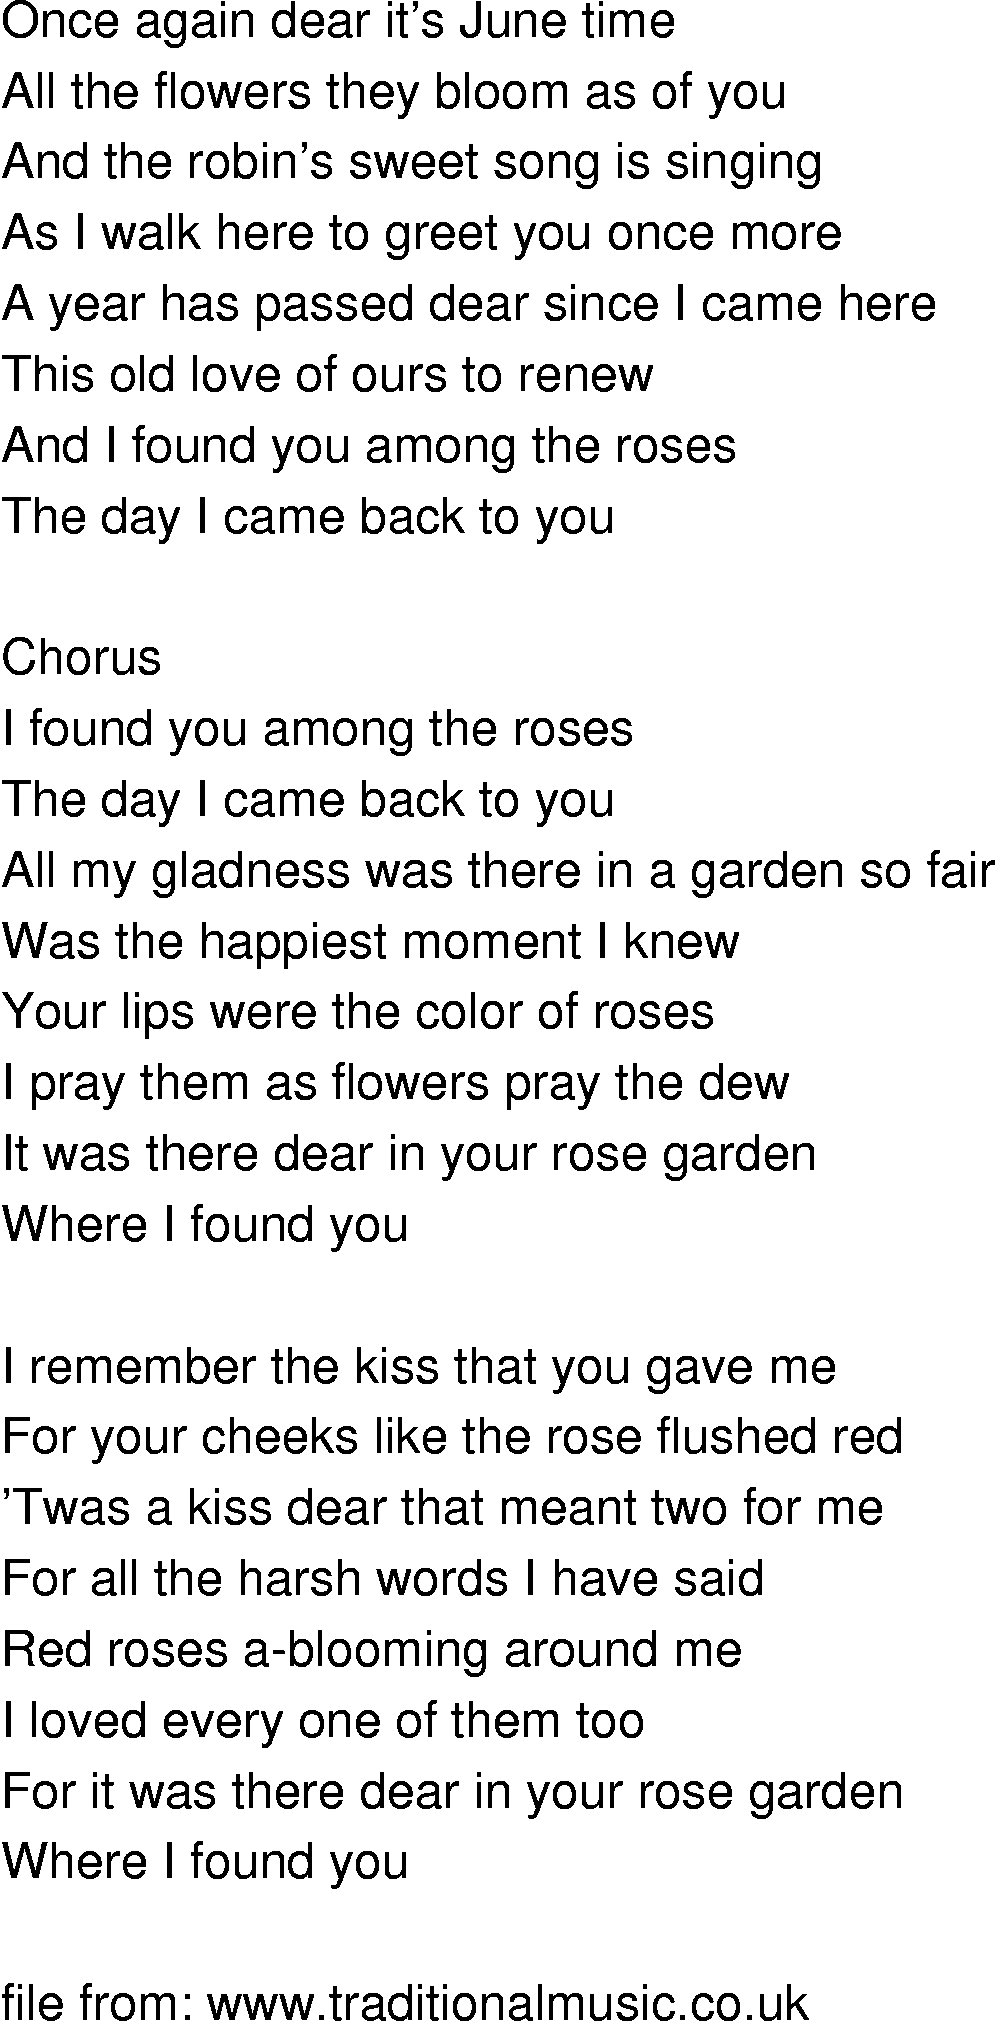 Old-Time (oldtimey) Song Lyrics - i found you among the roses